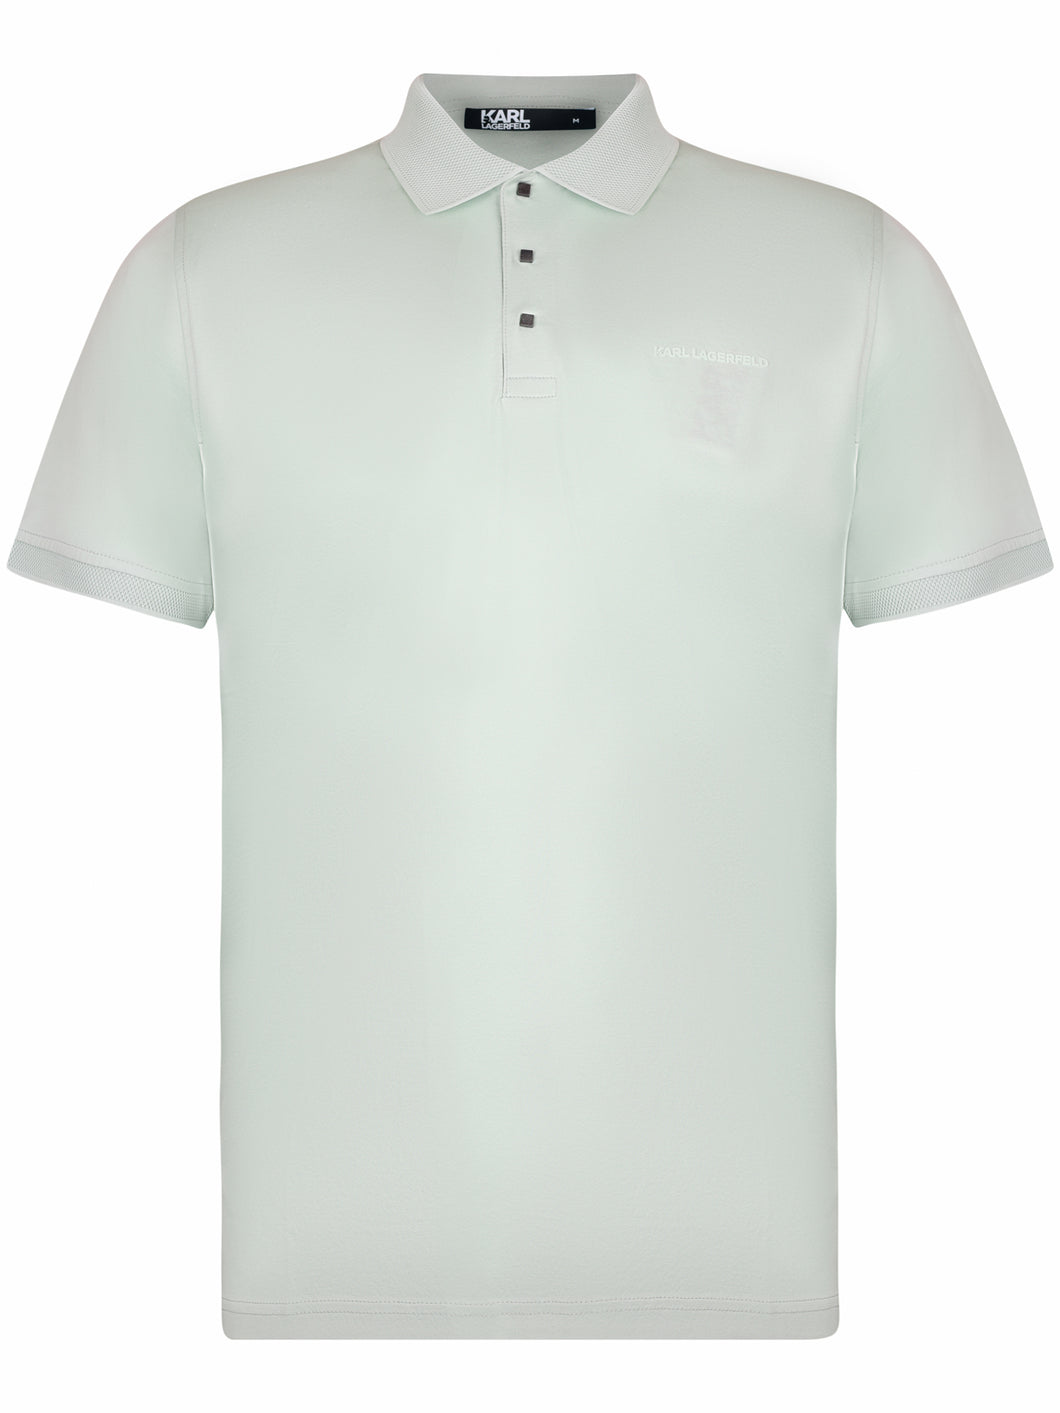 Lagerfeld Tonal Logo Polo Shirt Mint